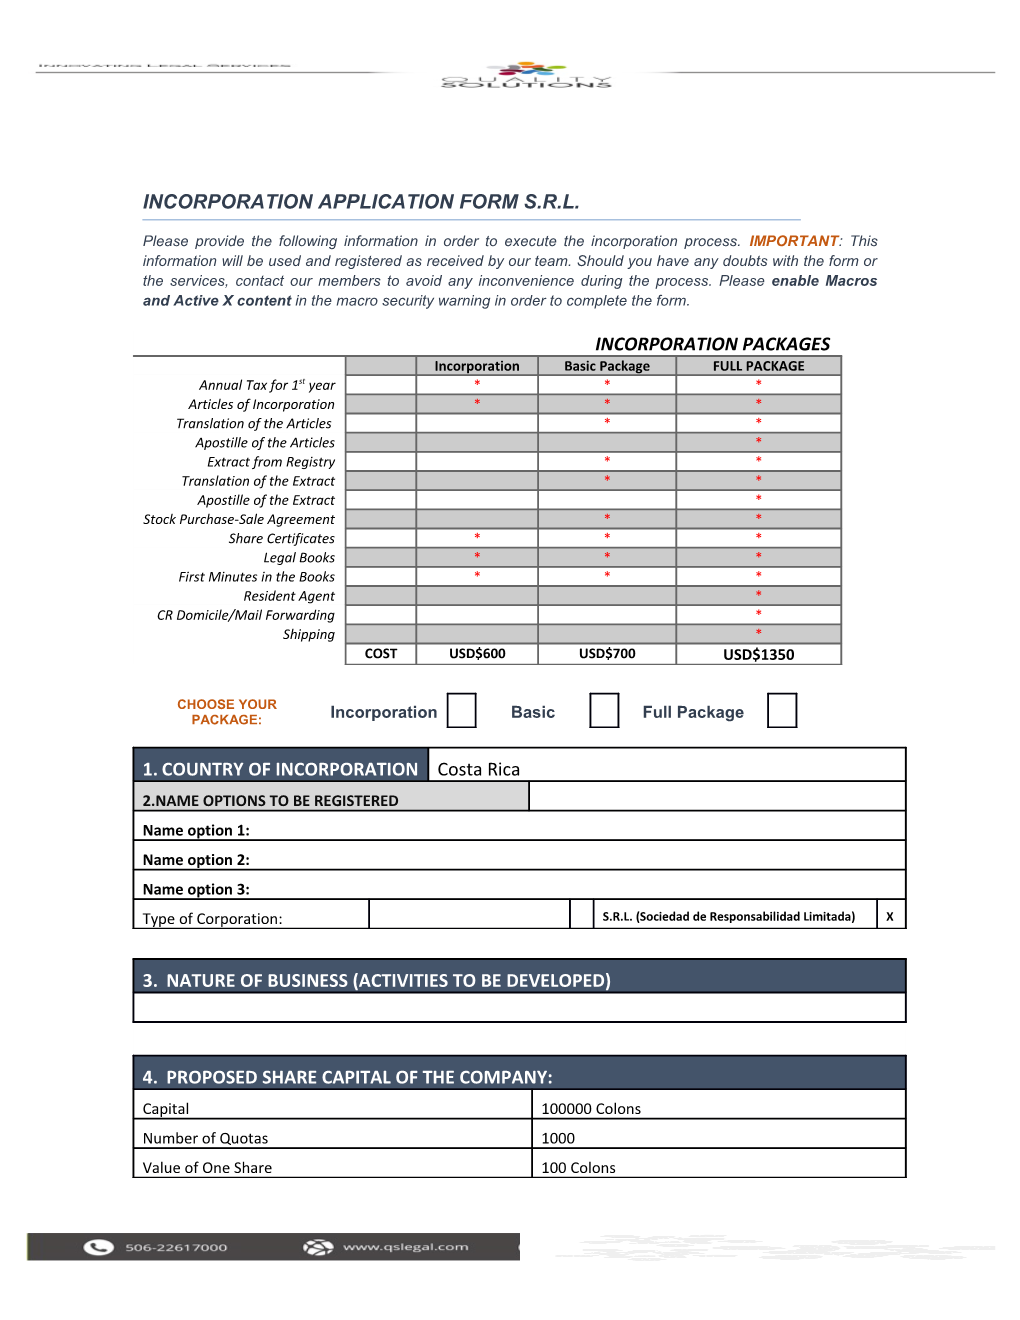 Incorporation Application Form S.R.L